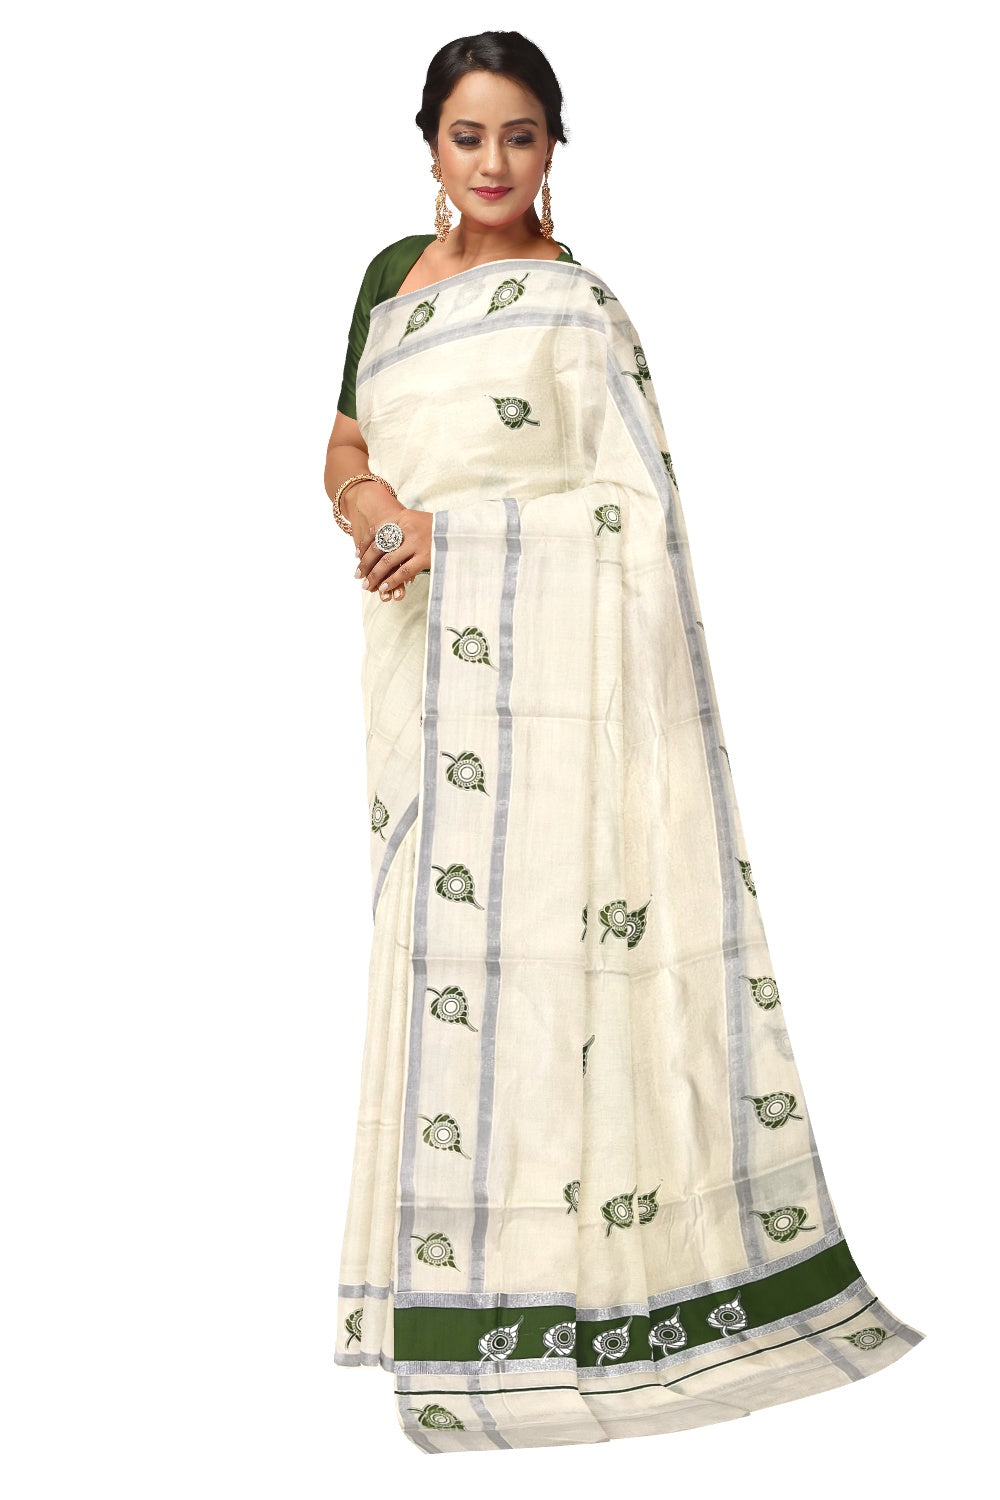 Pure Cotton Kerala Silver Kasavu Saree with White Leaf Block Printed Design in Bottle Green Pallu